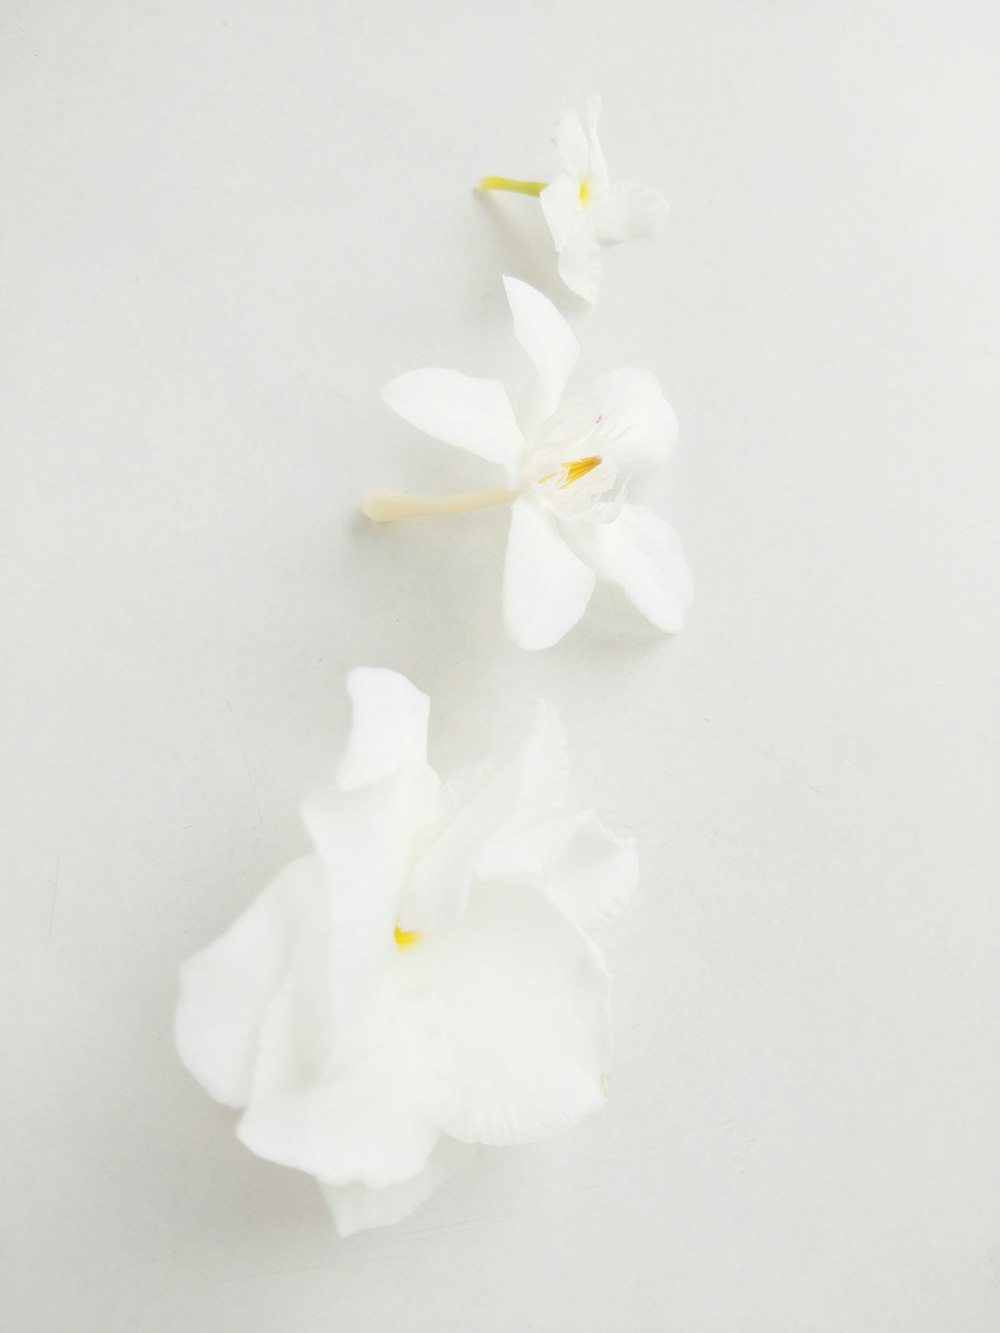 white flower on white surface